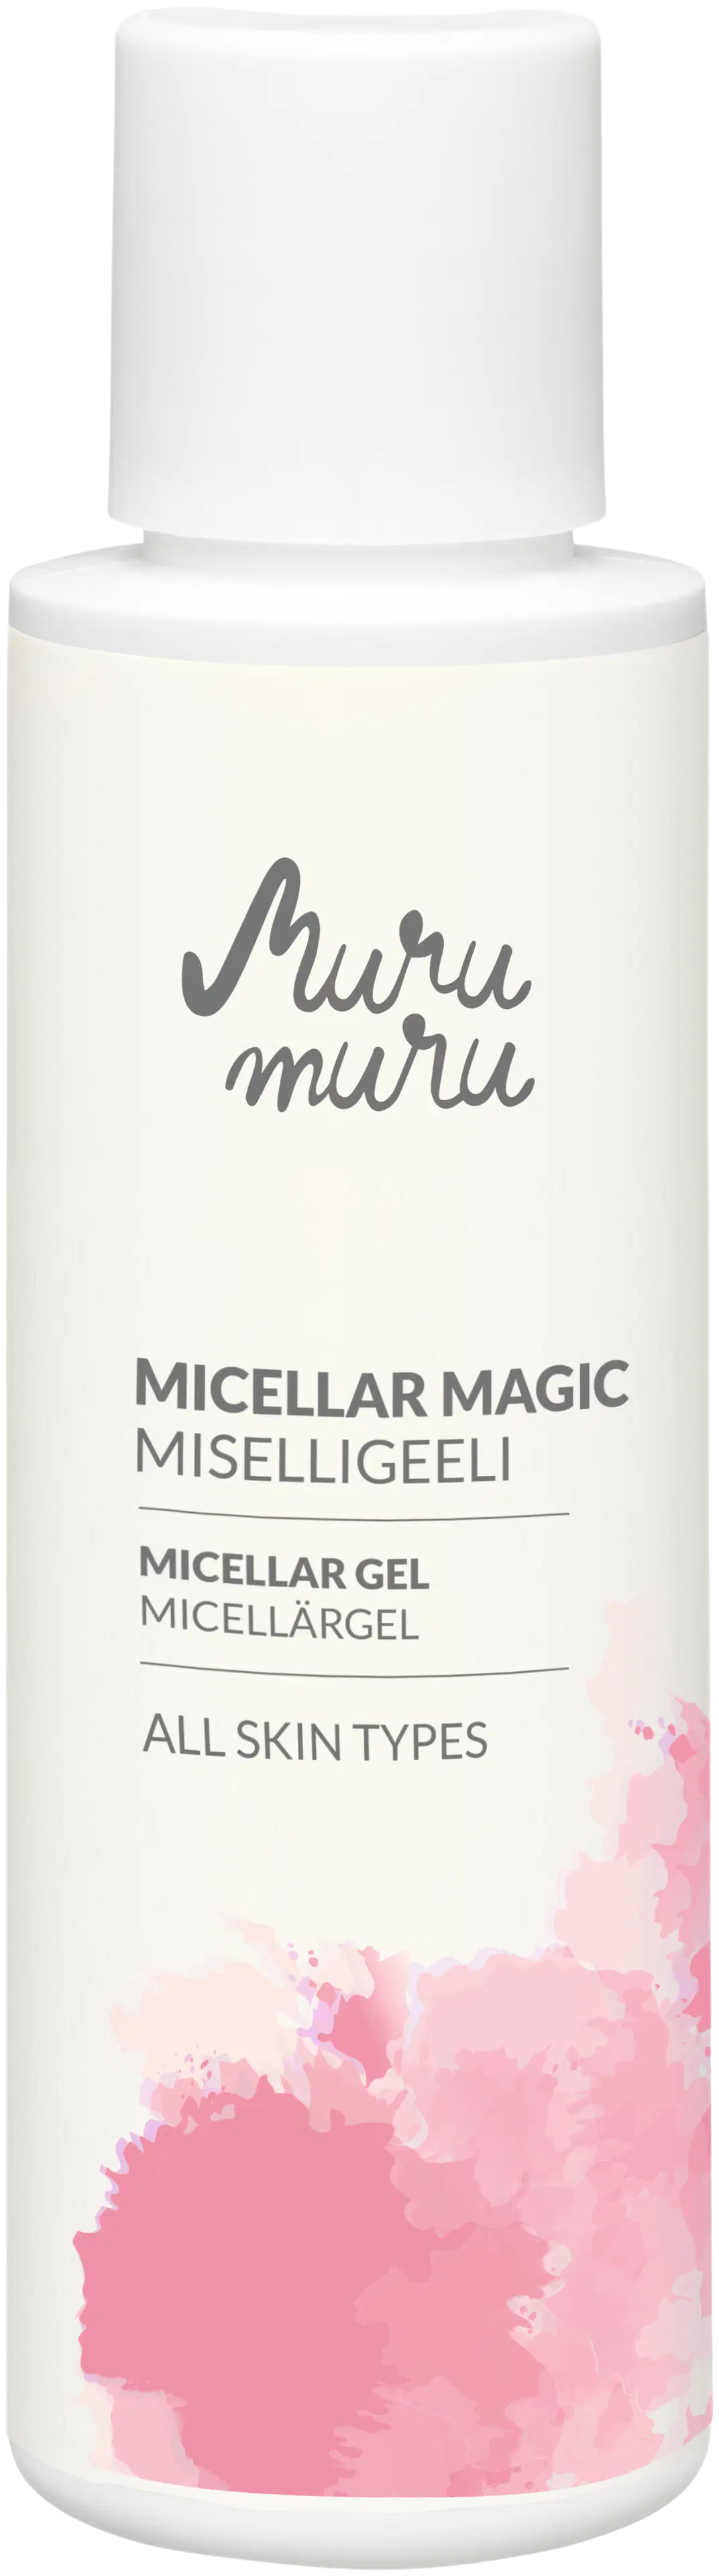 Murumuru Micellar Magic Miselligeeli 100 ml